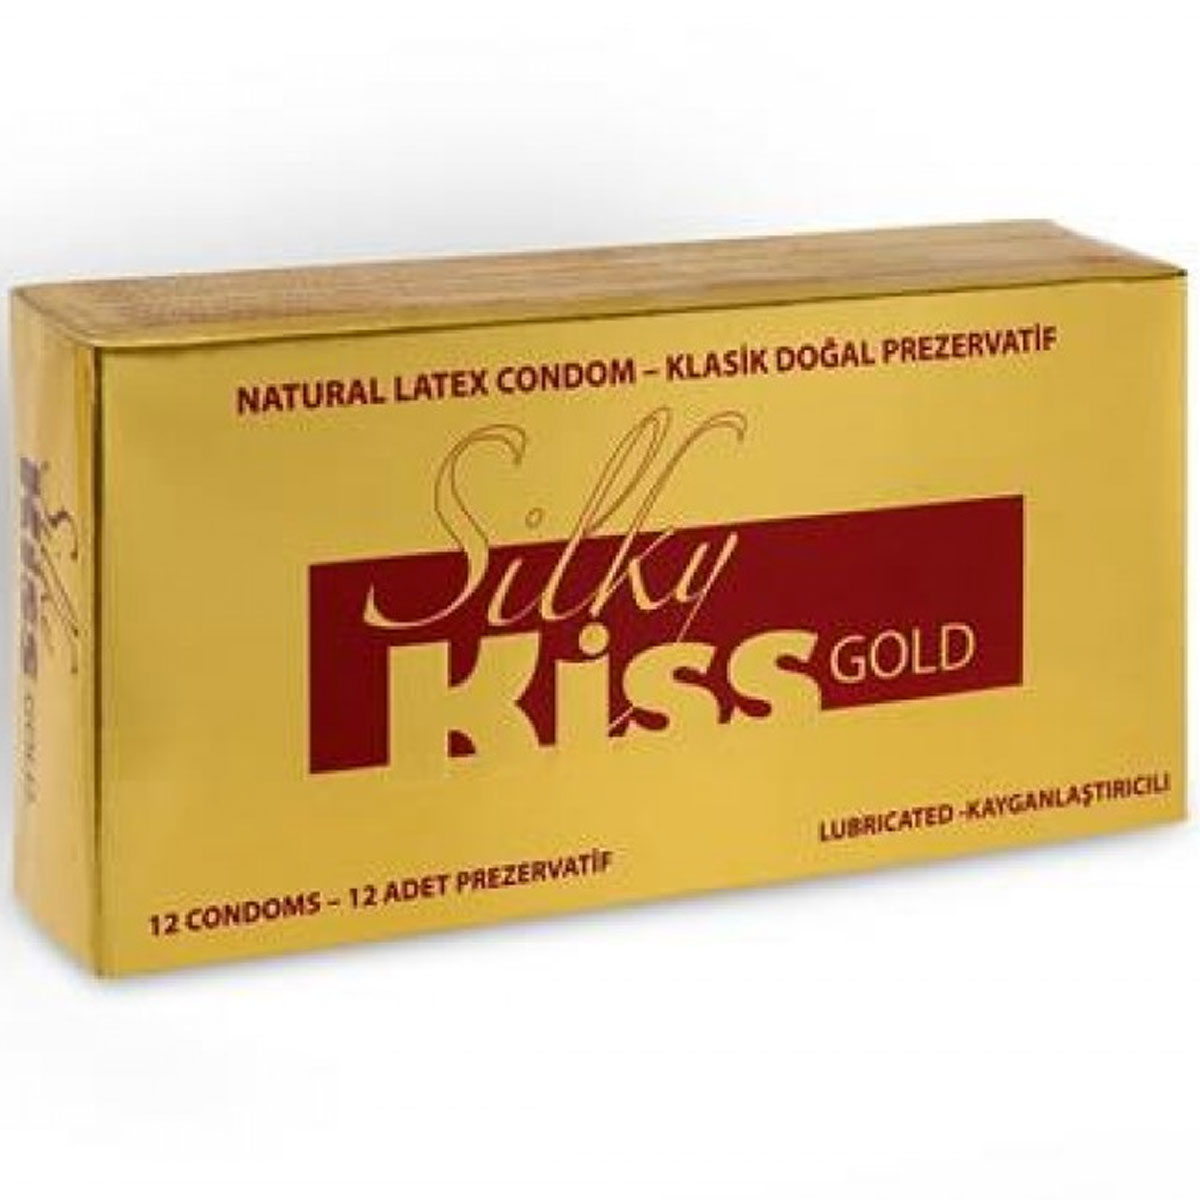 Silky Kiss Gold Kayganlastiricili Prezervatif C-1574